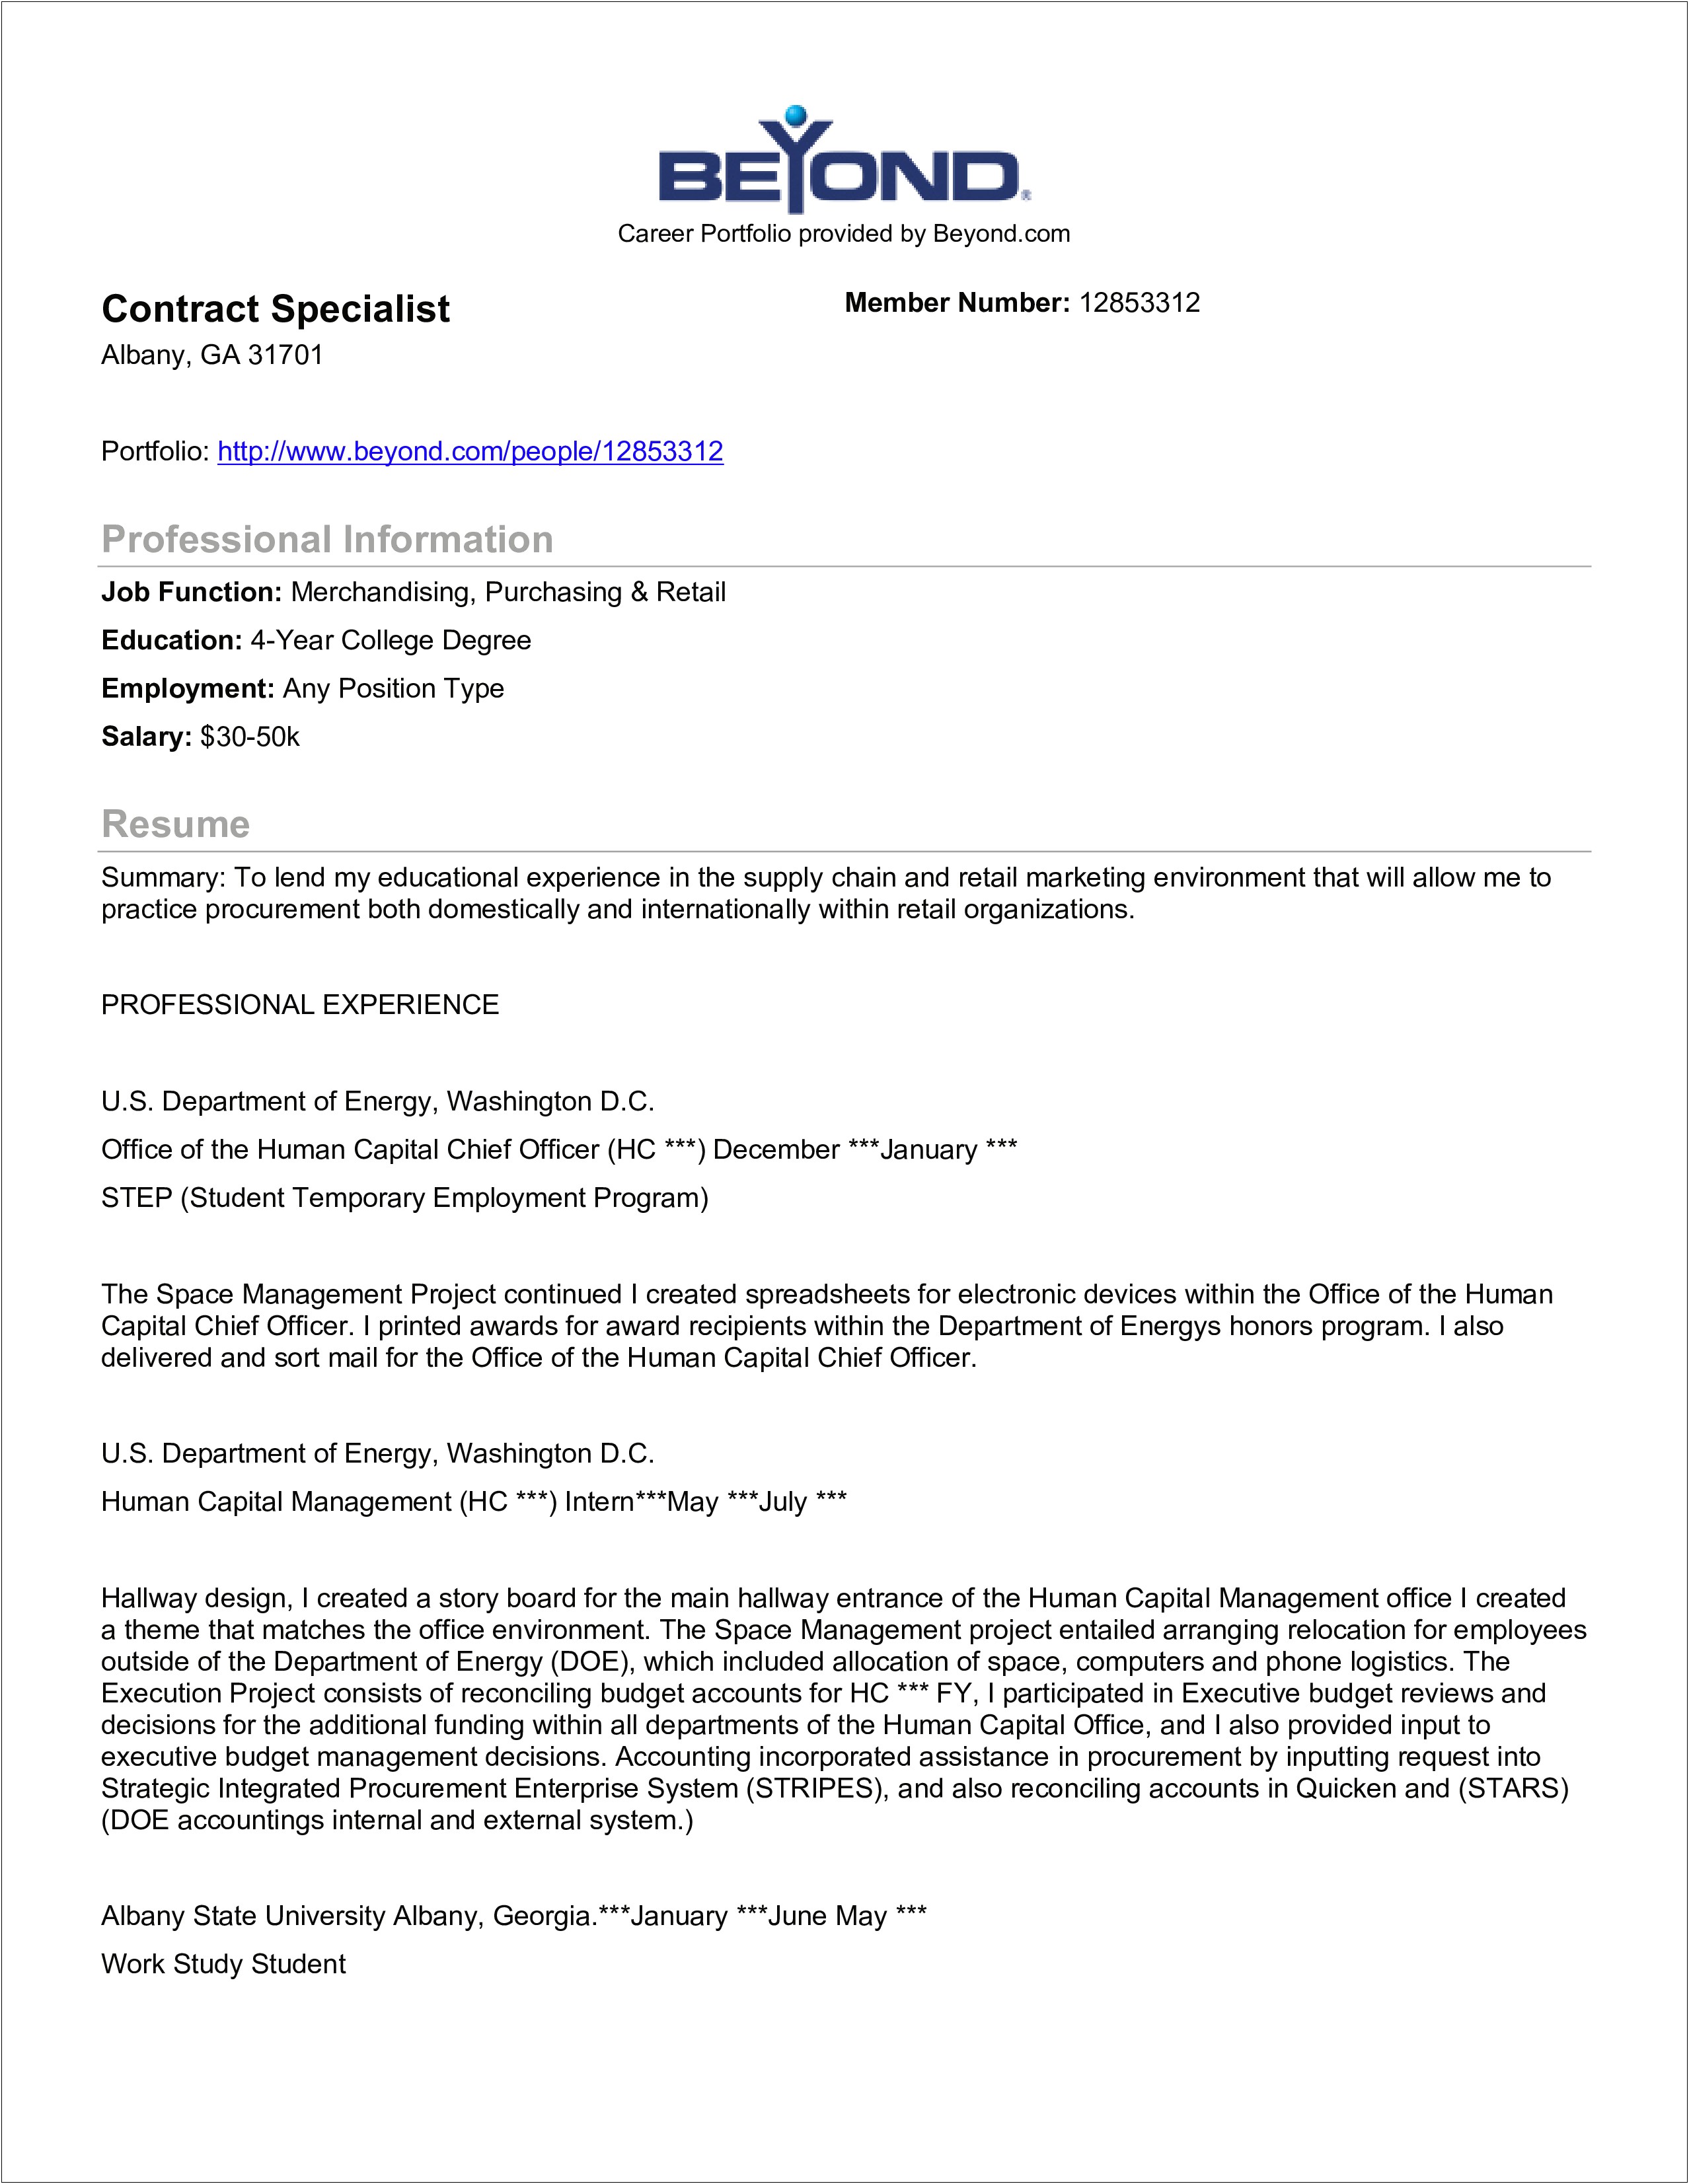 Contract Specialist Job Description For Resume